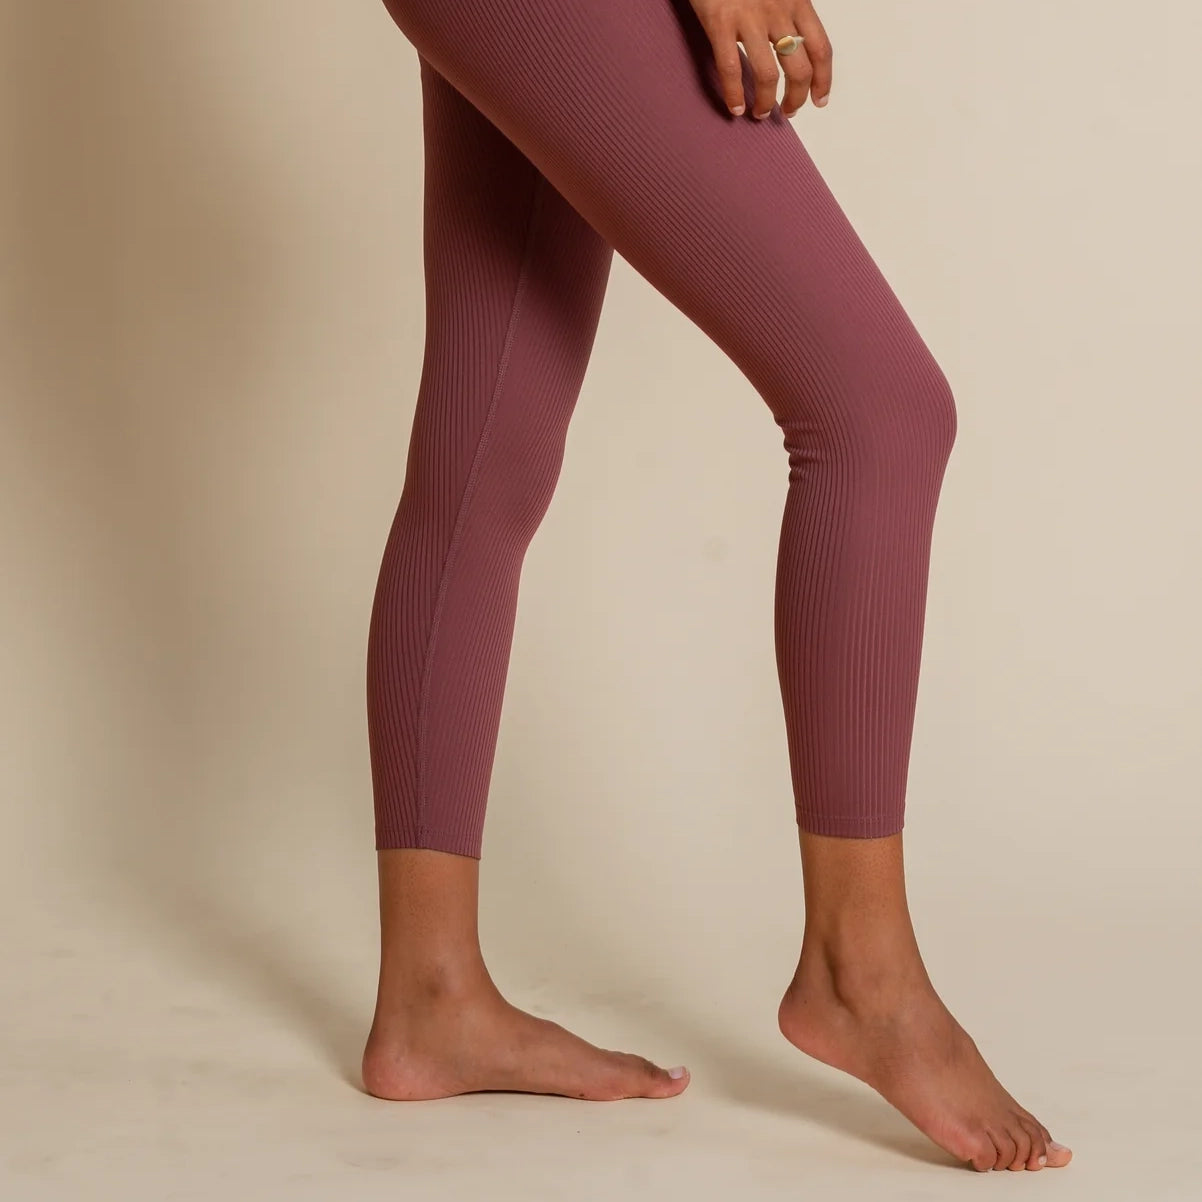 A pair of legs wearing burgundy Girlfriend Collective leggings.